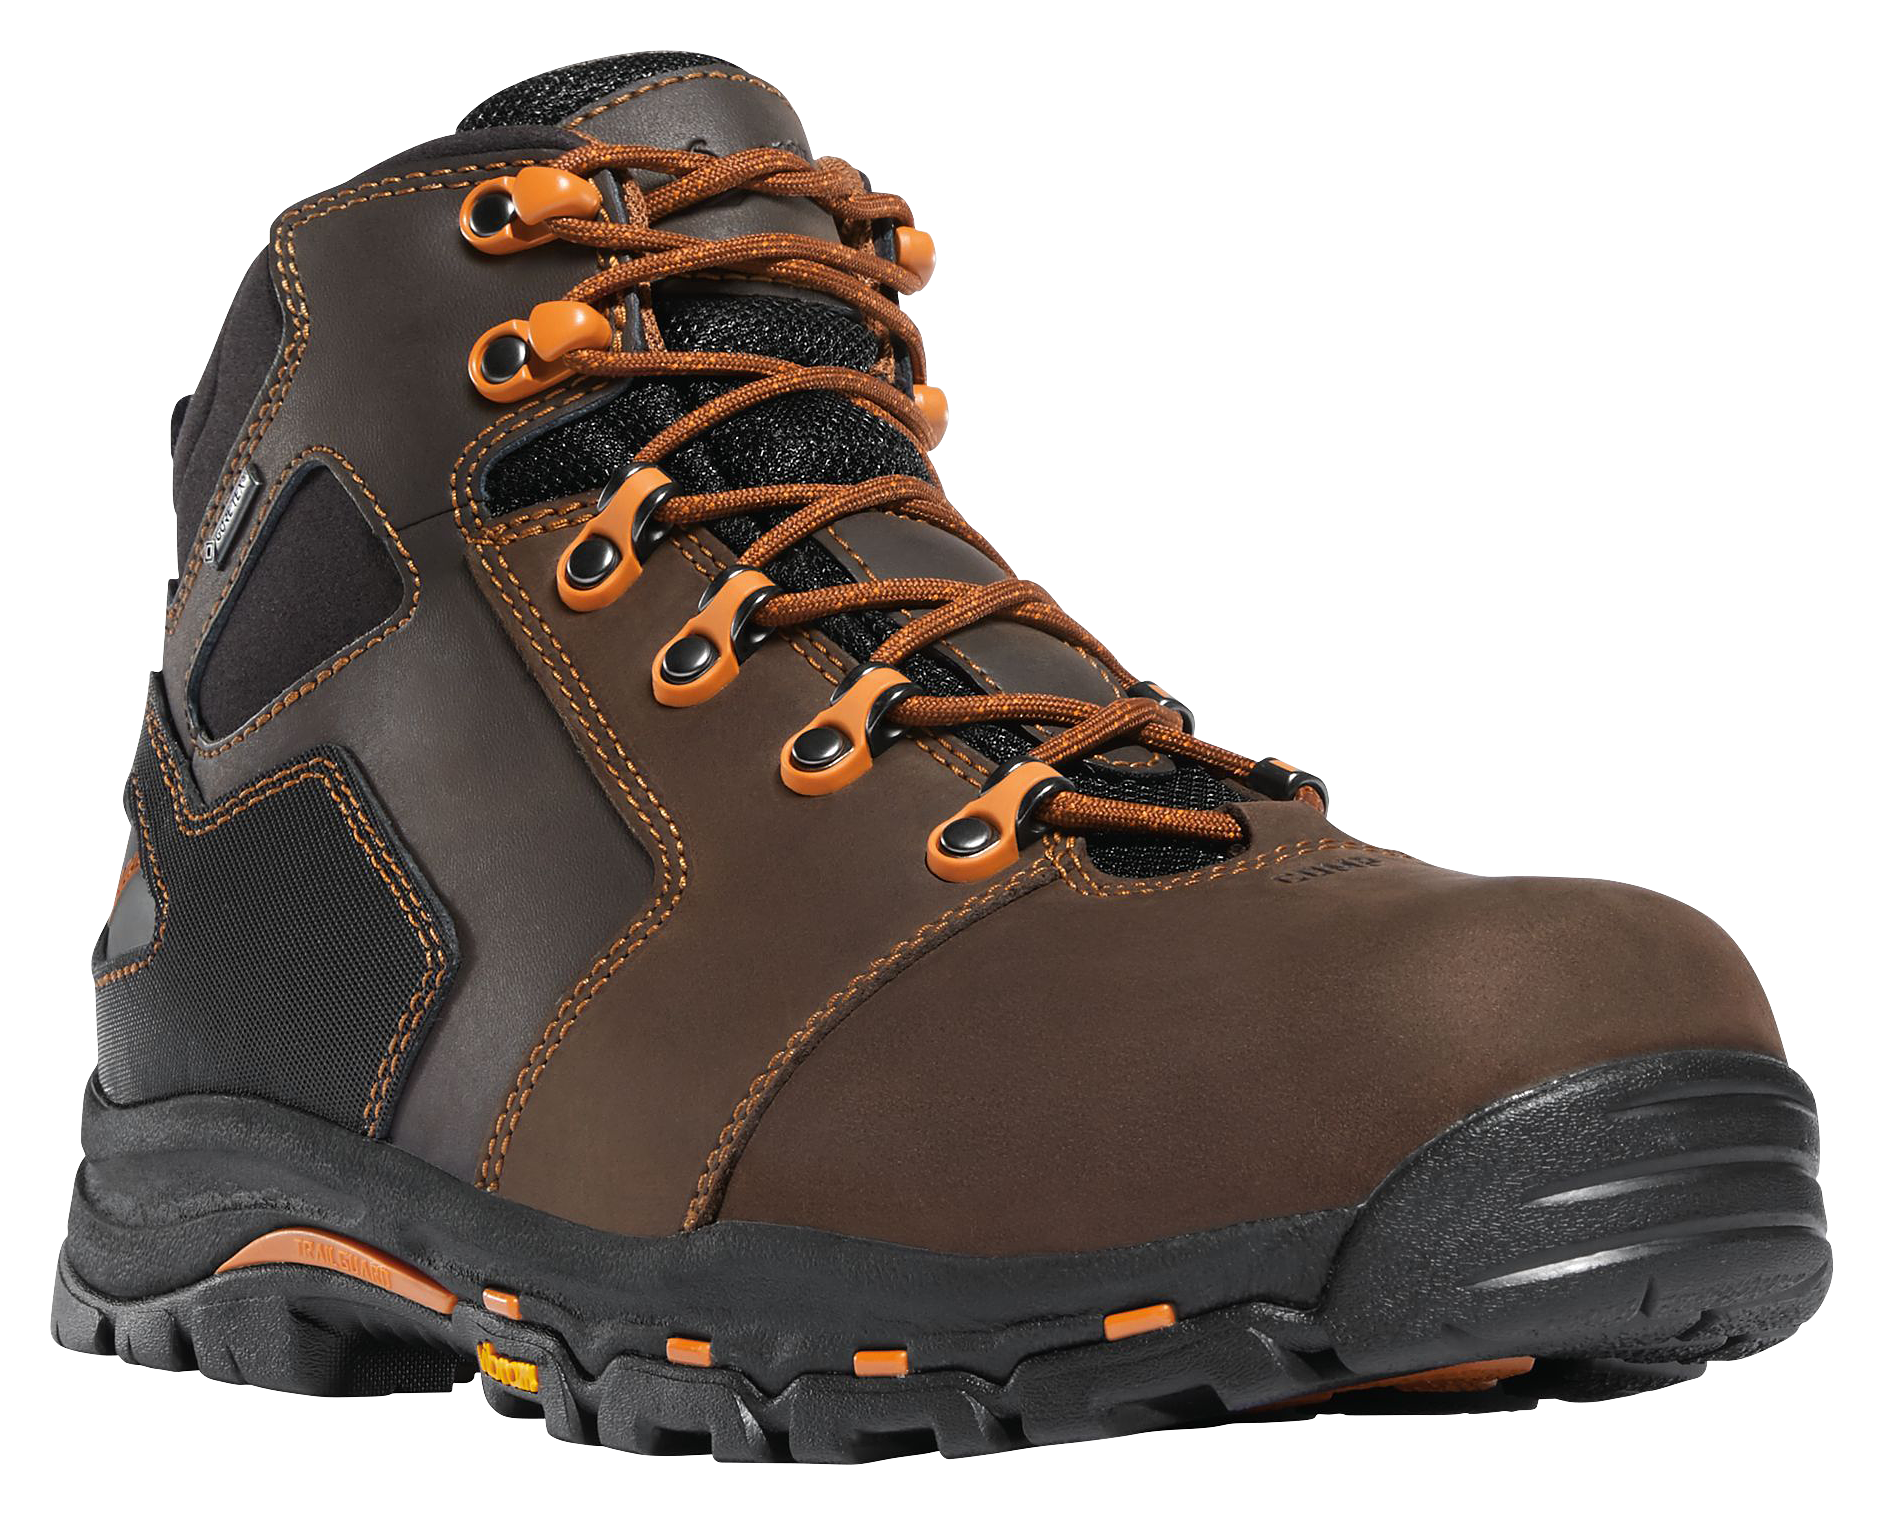 Danner Vicious 4.5'' GORE-TEX EH Work Boots for Men - Brown/Orange - 11.5W